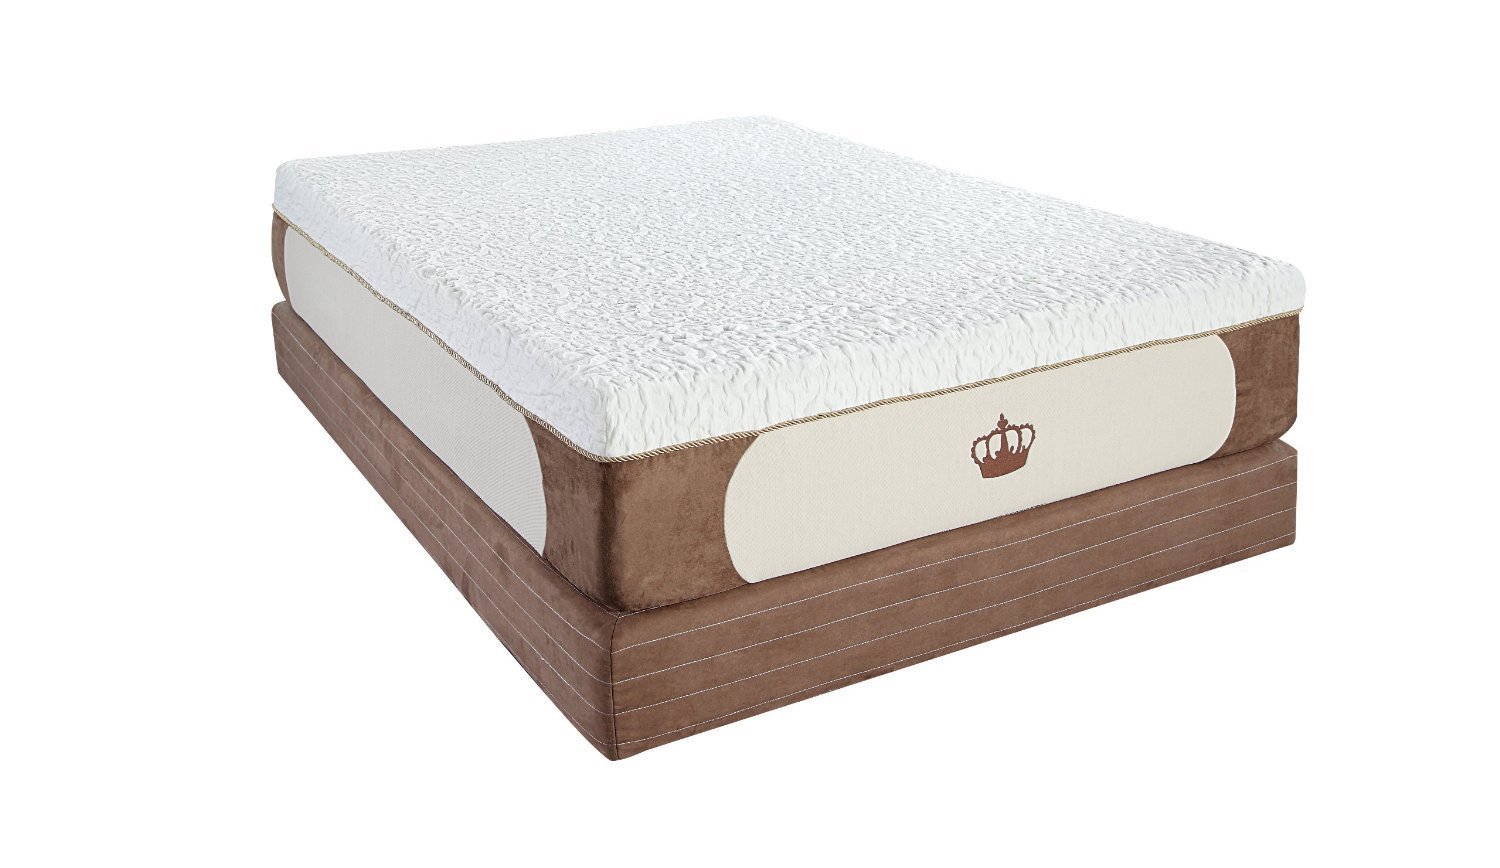 14 space foam mattress